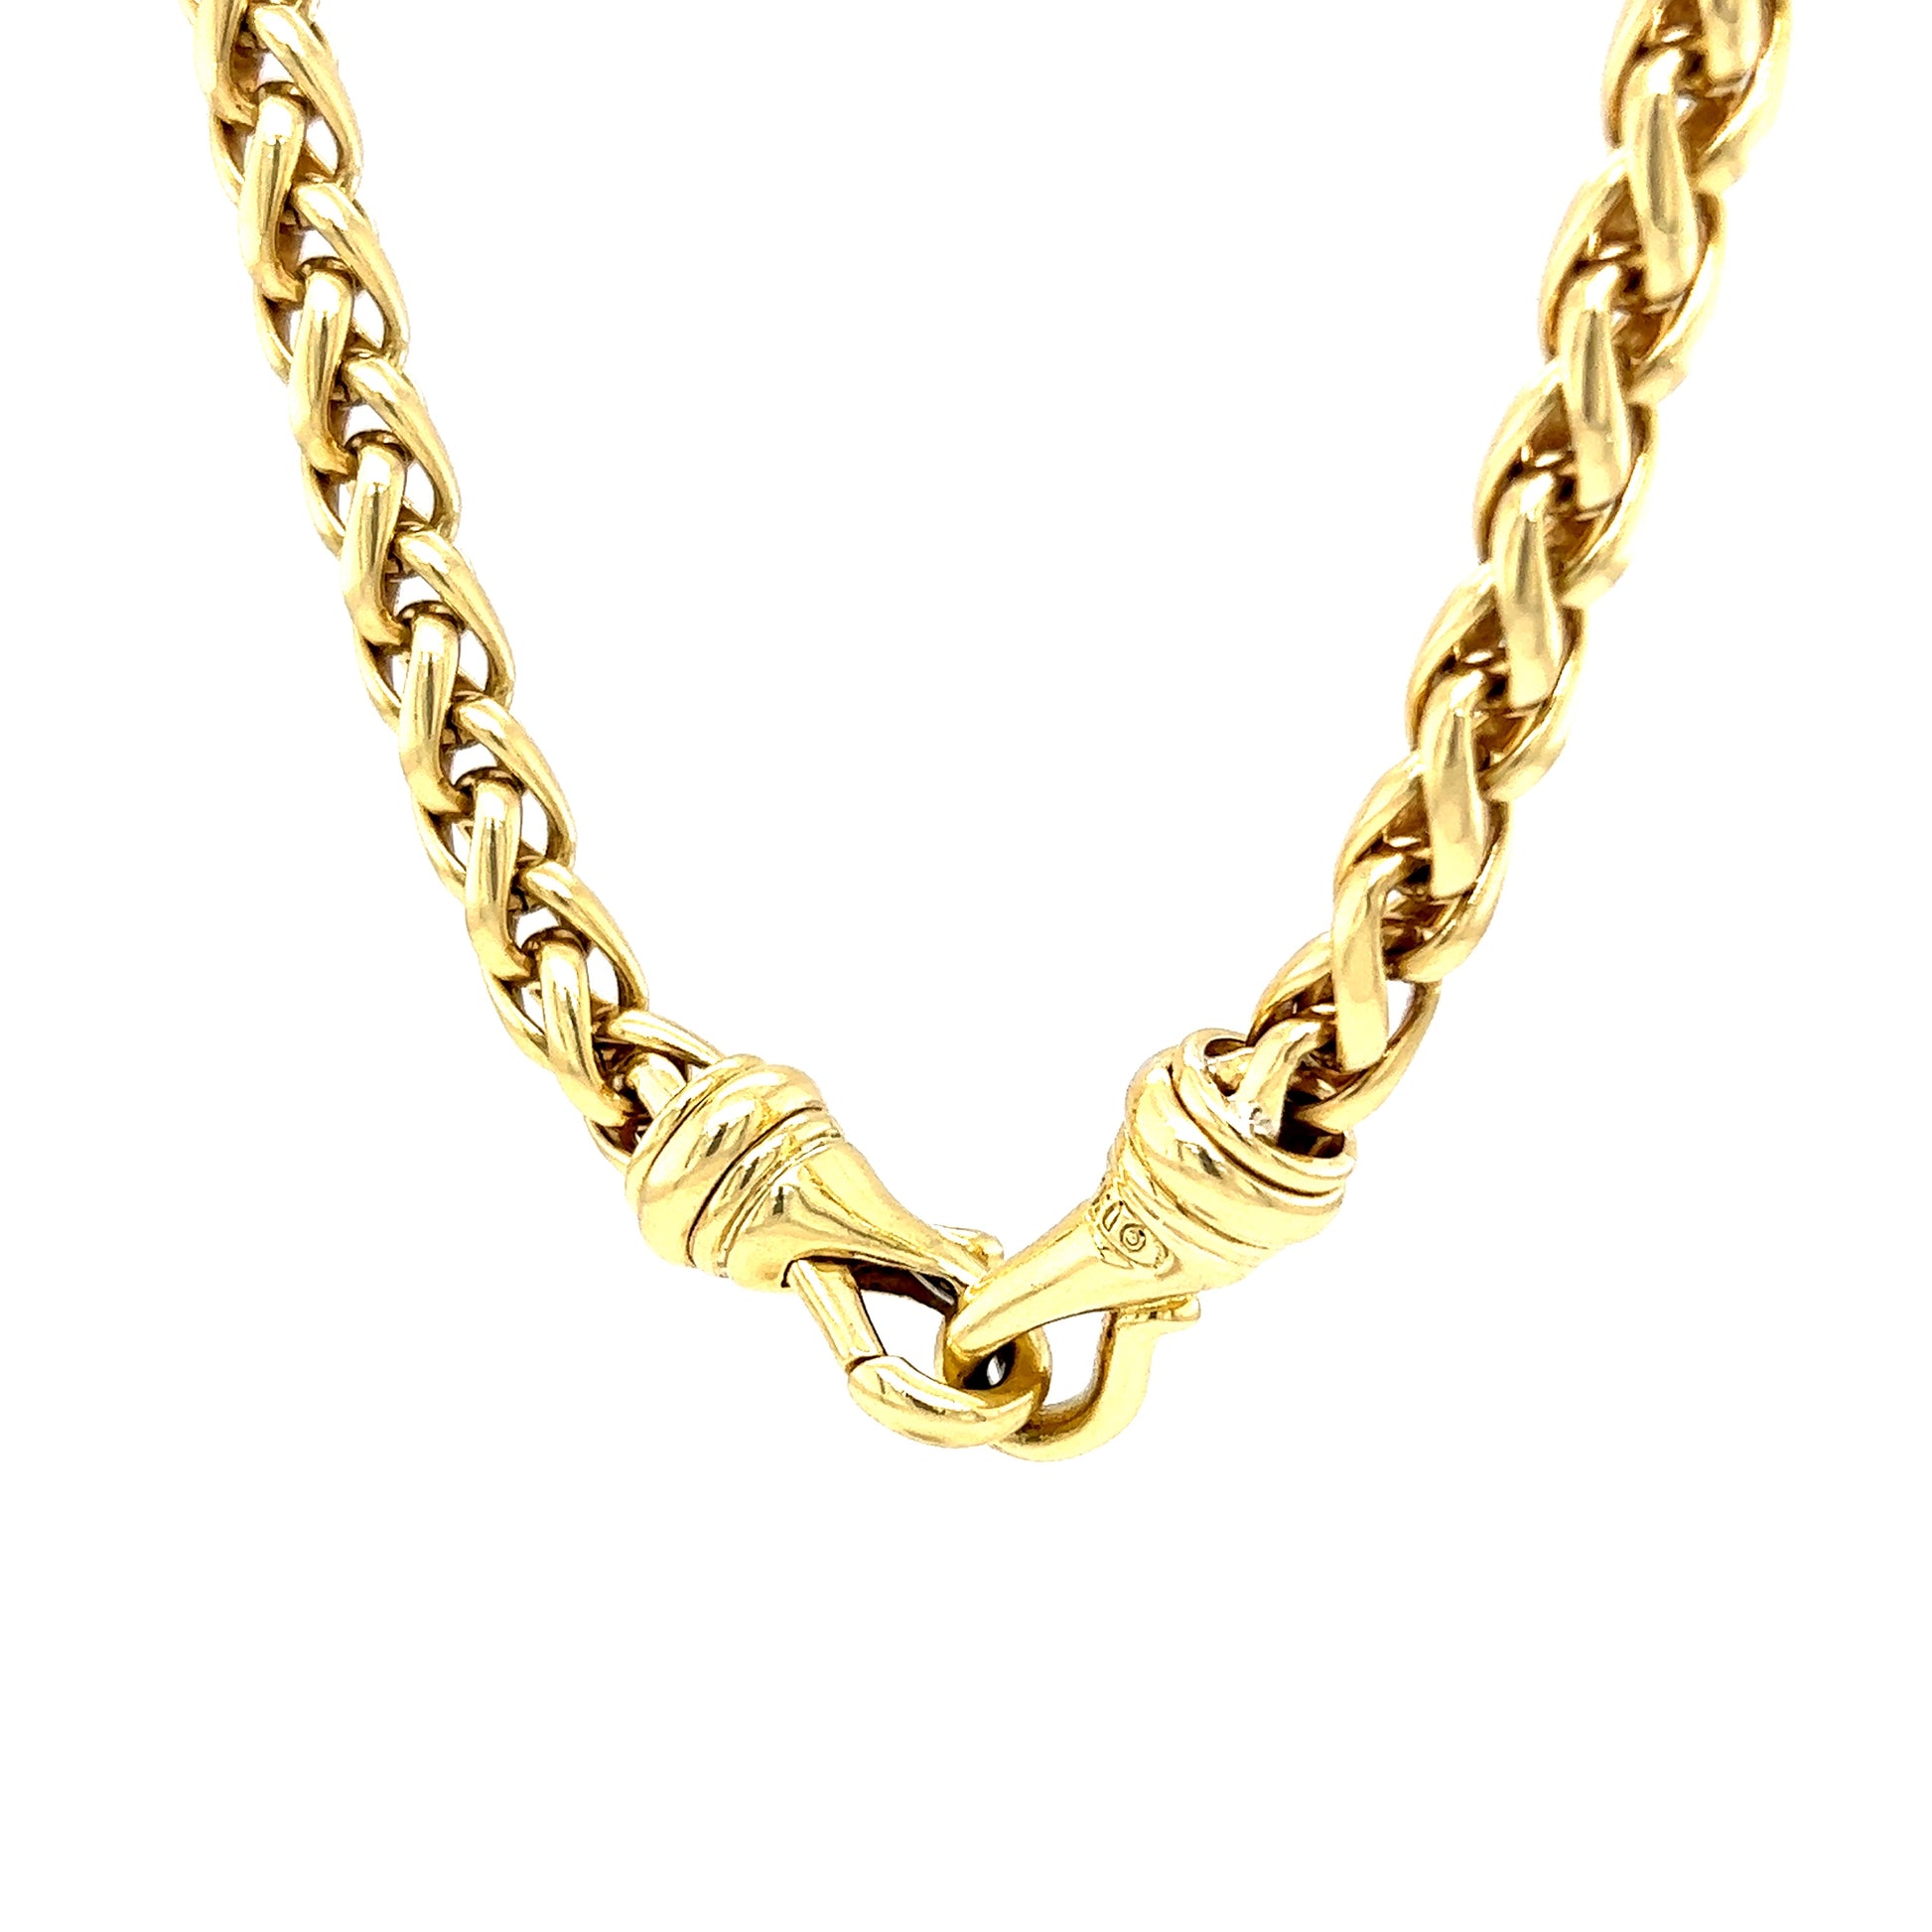 David Yurman 6mm Wheat Chain Necklace in 18k Yellow Gold